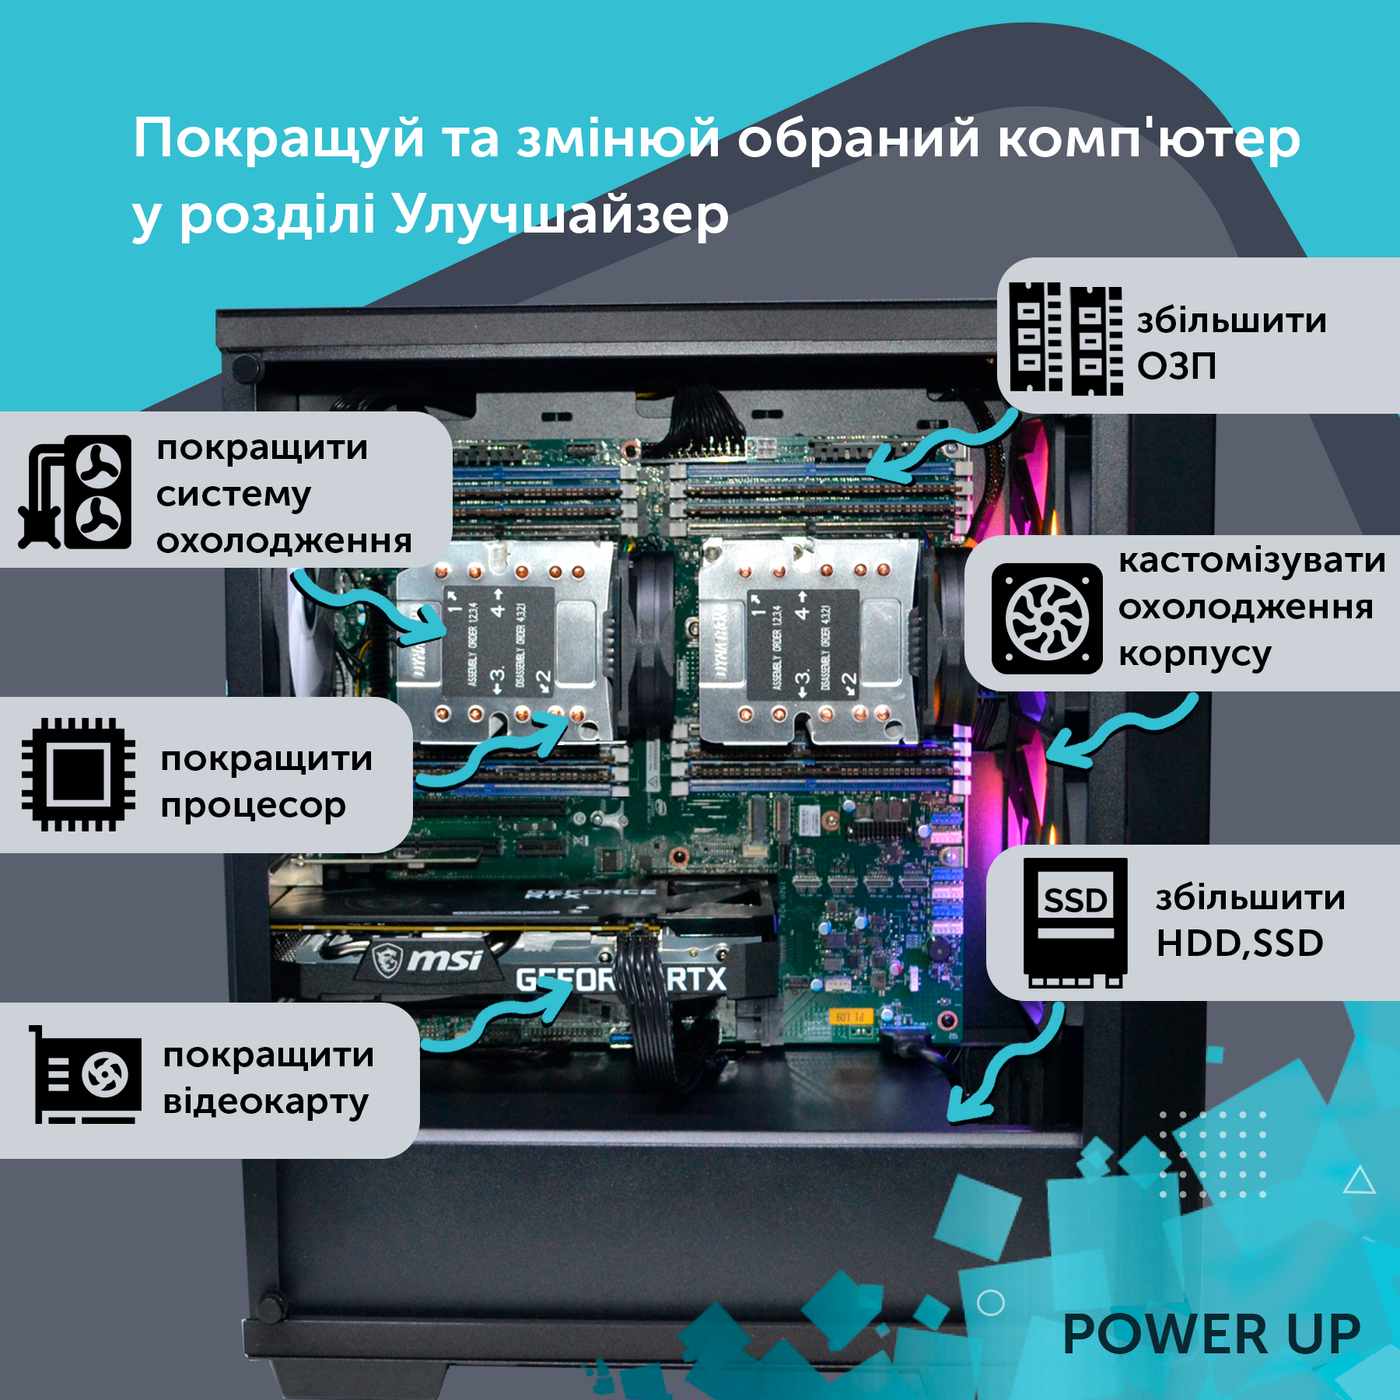 Сервер двопроцесорний TOWER PowerUp #71 AMD EPYC 7702 x2/128 GB/SSD 512GB х2 Raid/Int Video